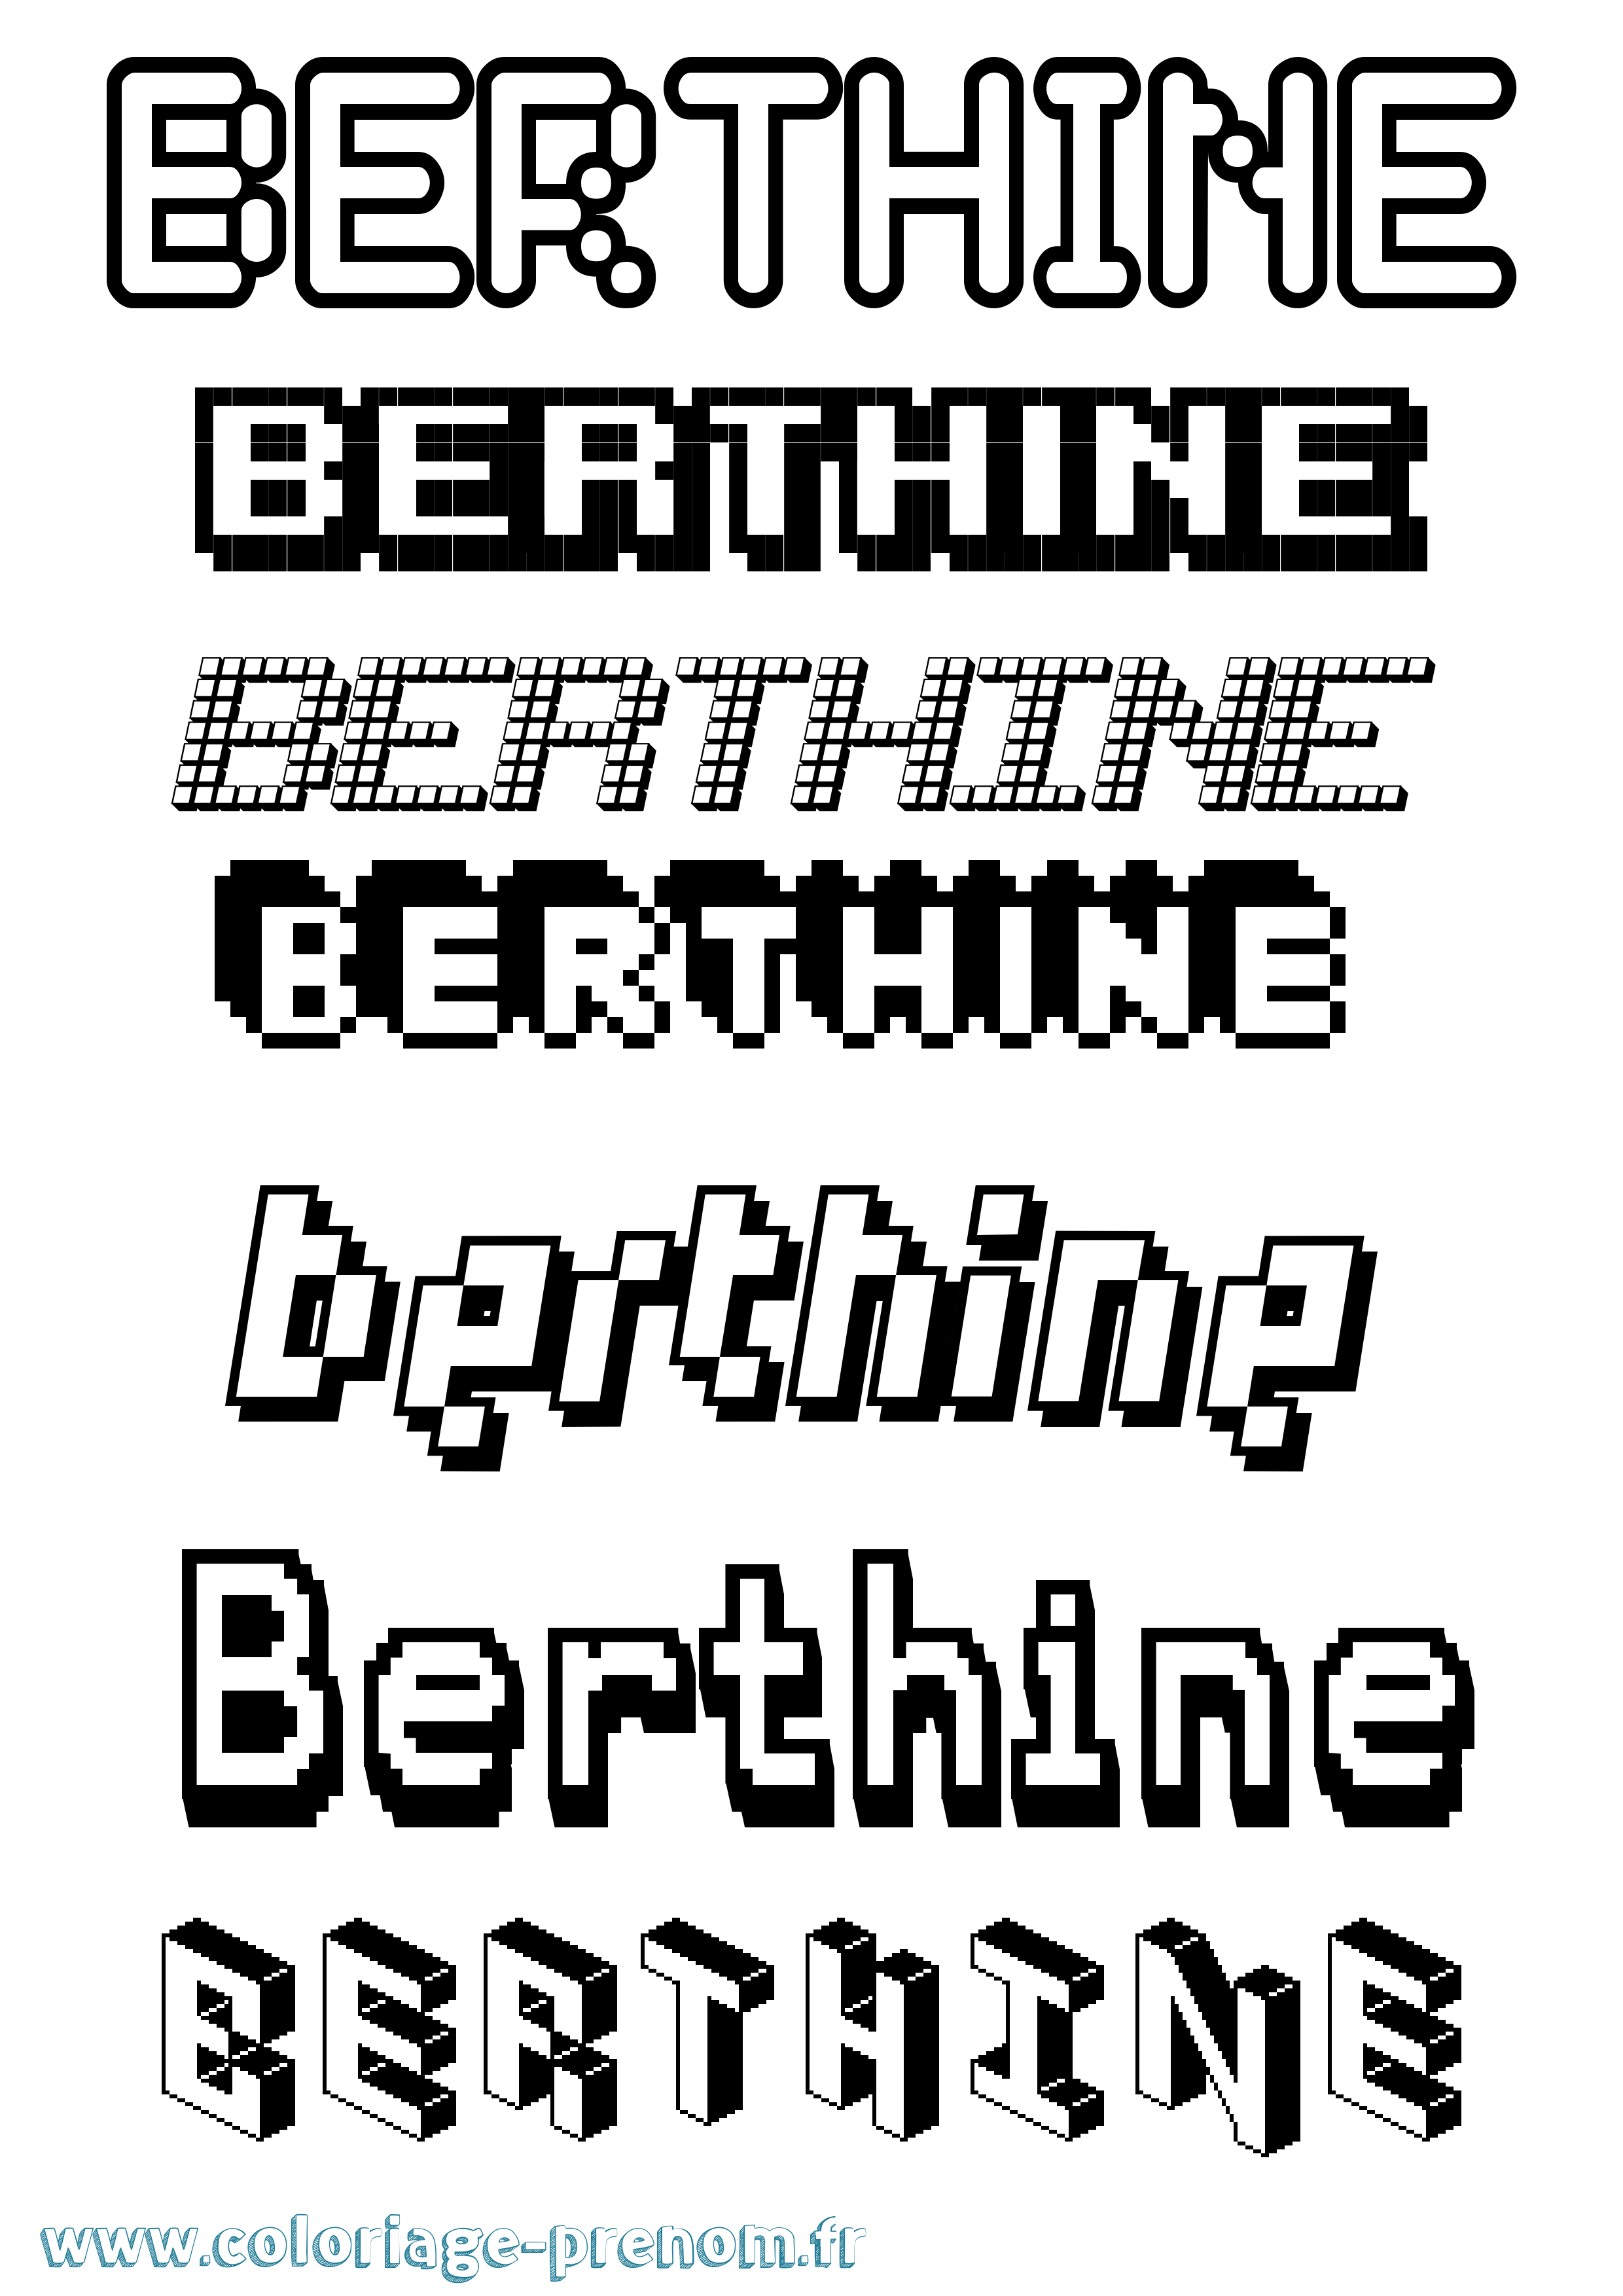 Coloriage prénom Berthine Pixel